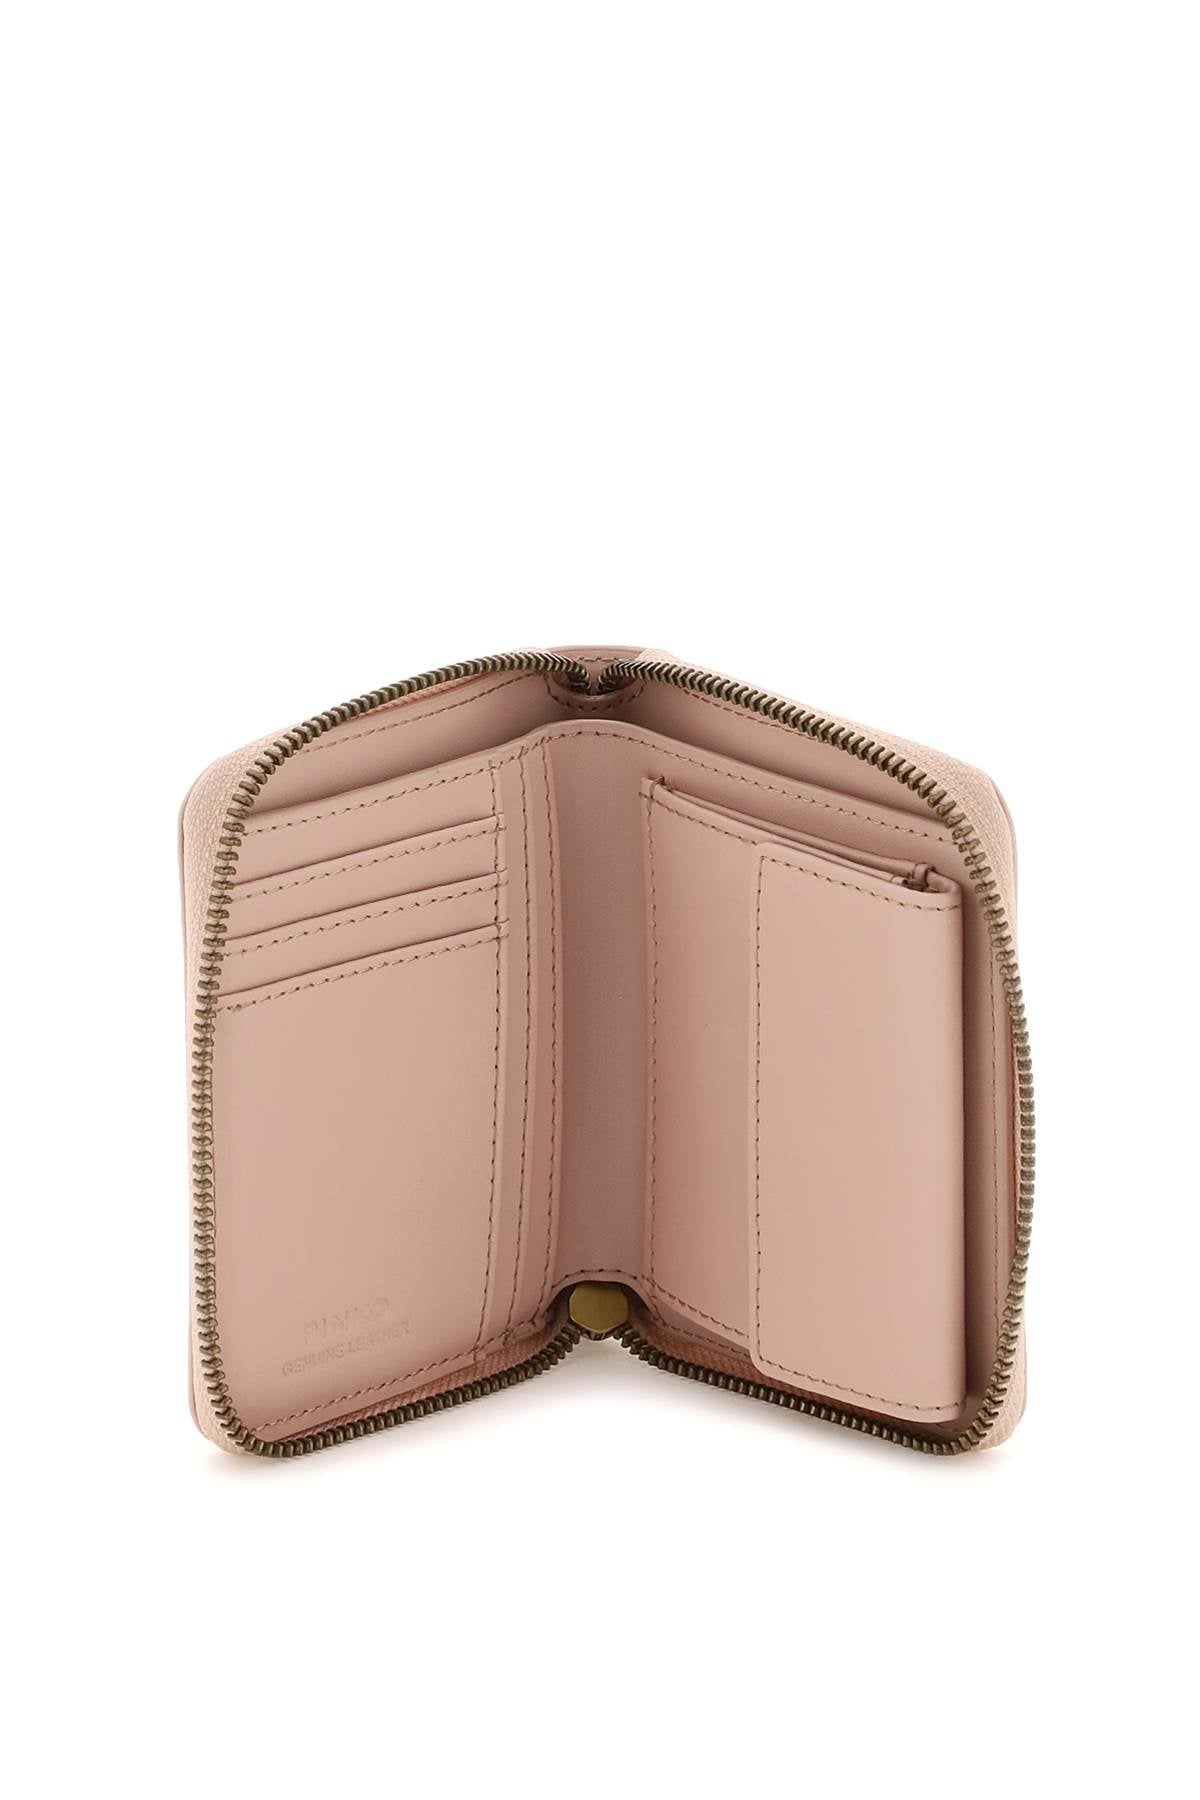 Pinko Pinko leather zip-around wallet